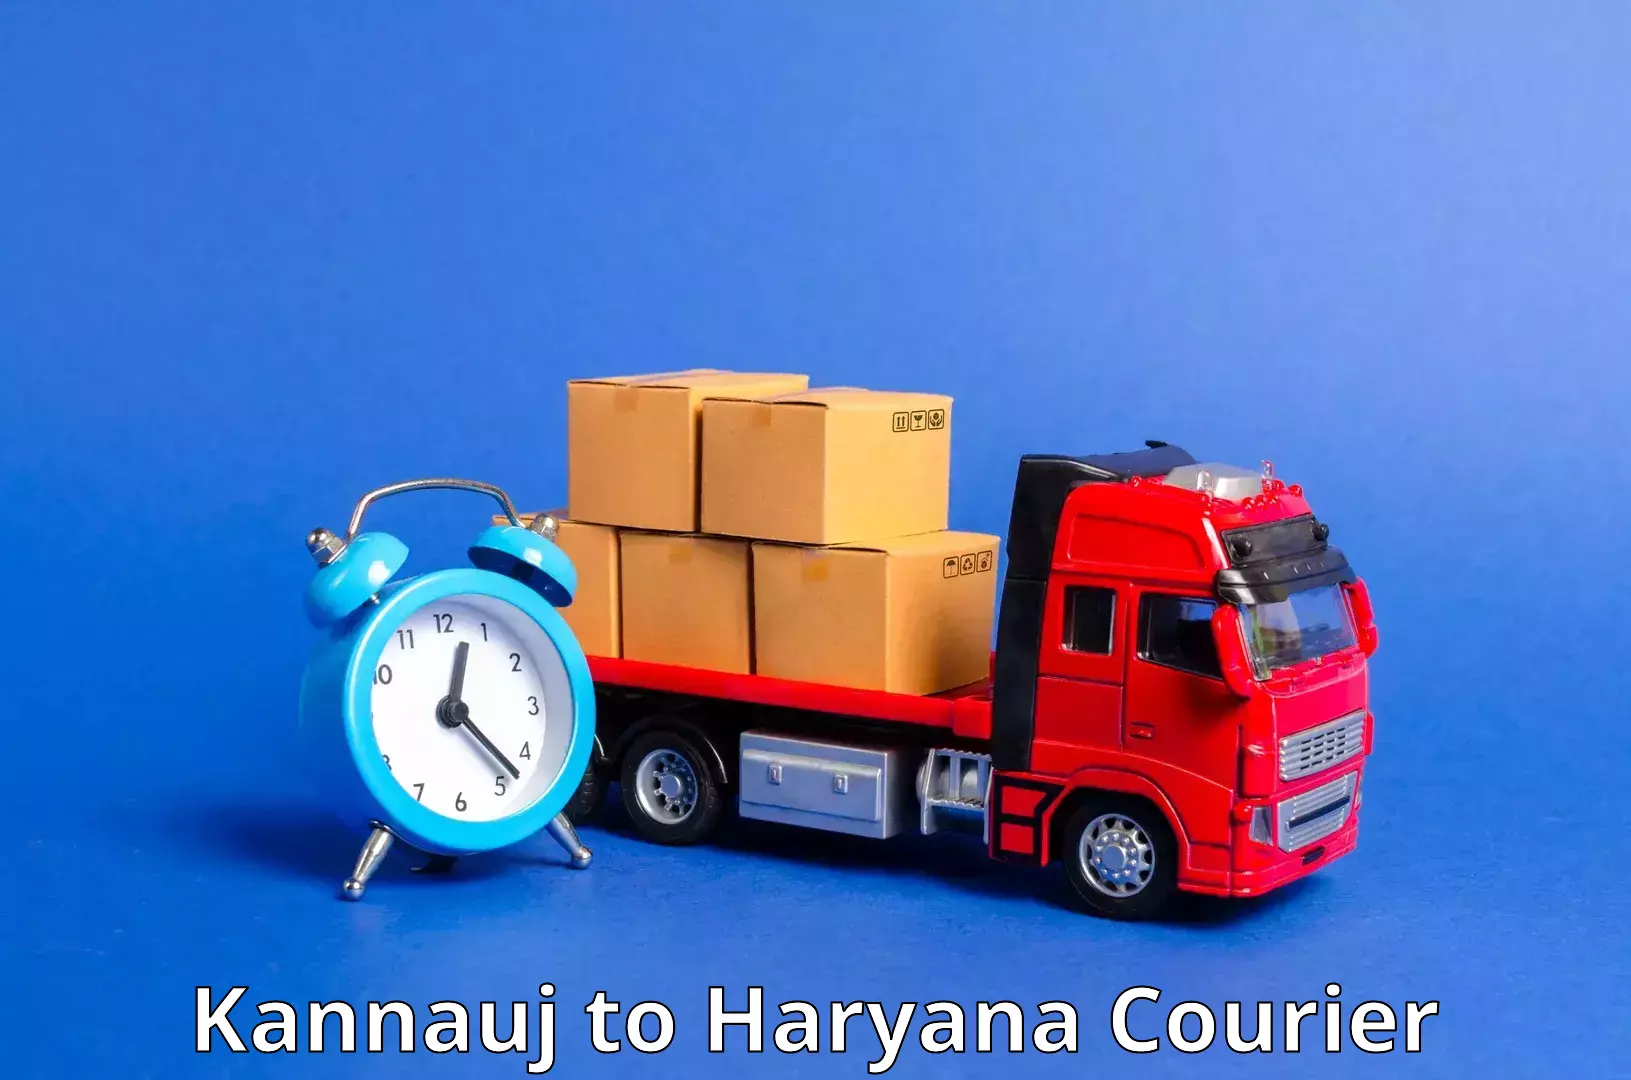 Tailored shipping plans Kannauj to Palwal